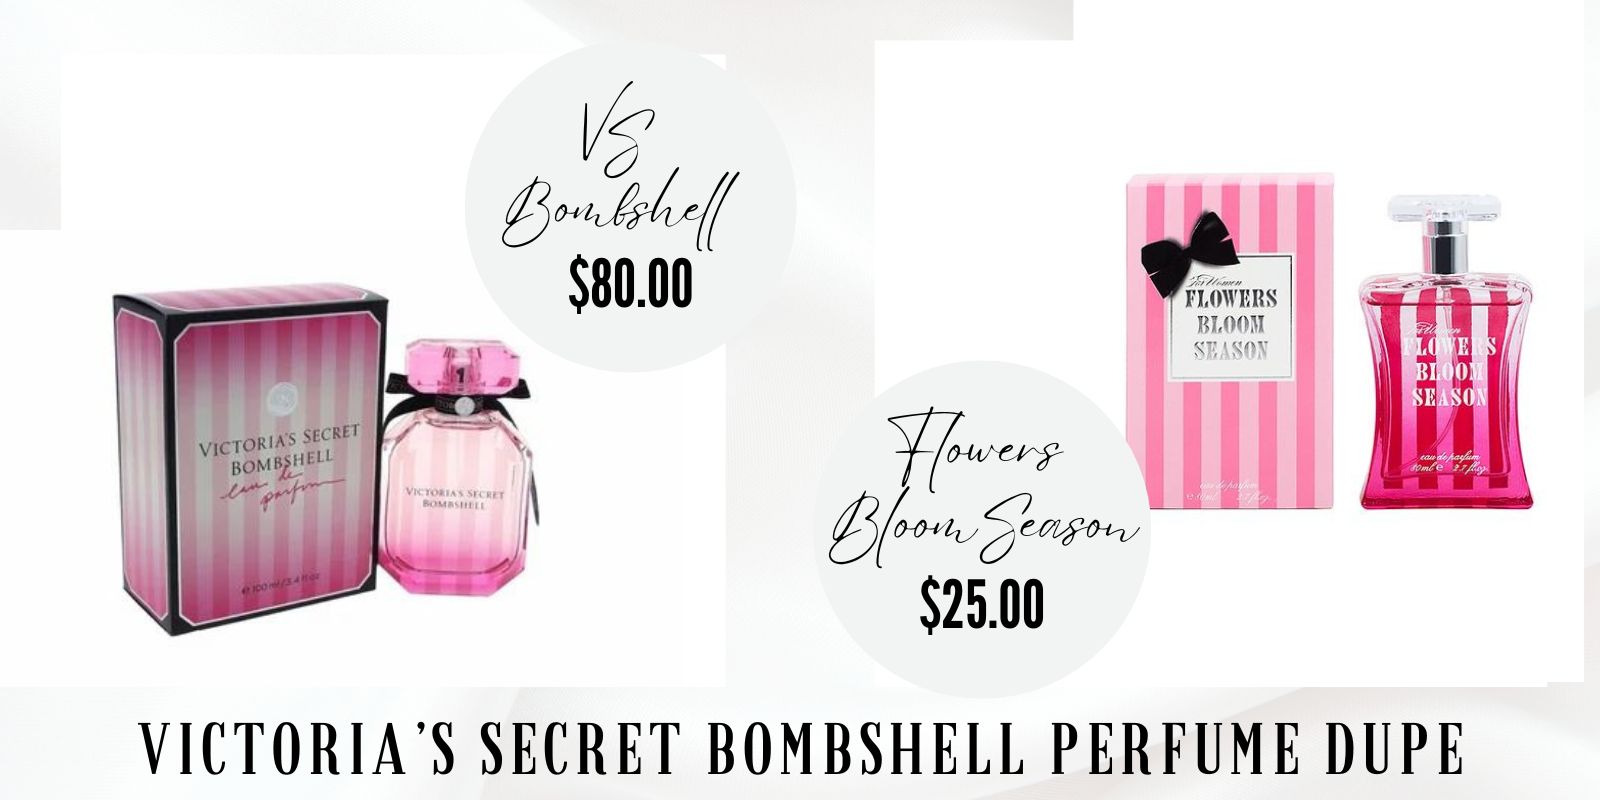 Victoria’s Secret Bombshell Perfume Dupe: Flowers Bloom Season Eau de Parfum